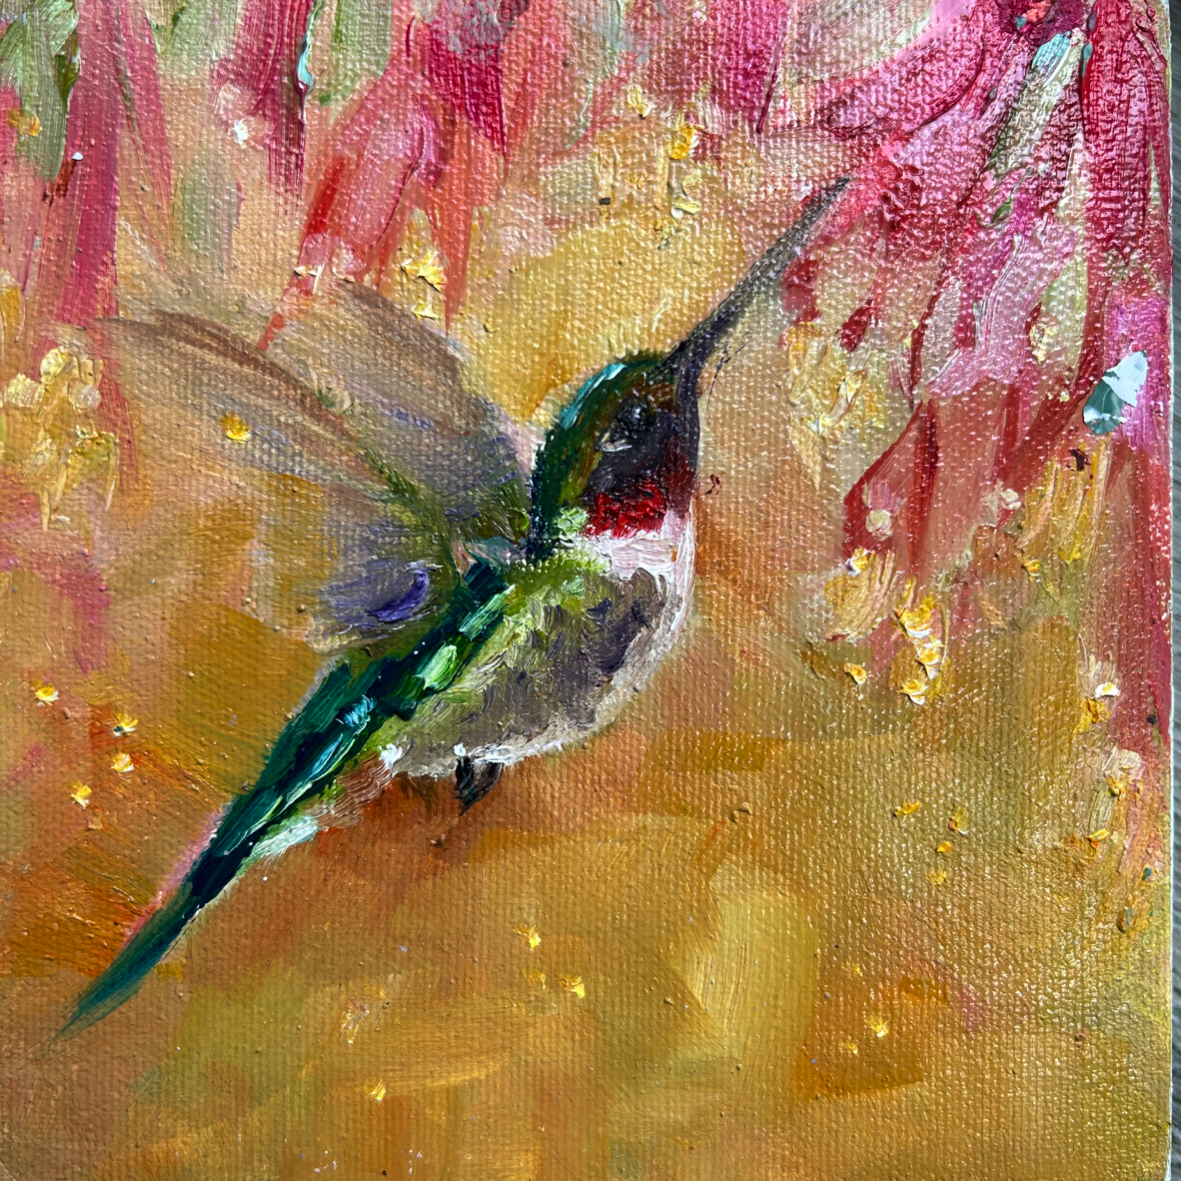 On the Fly, Hummingbird